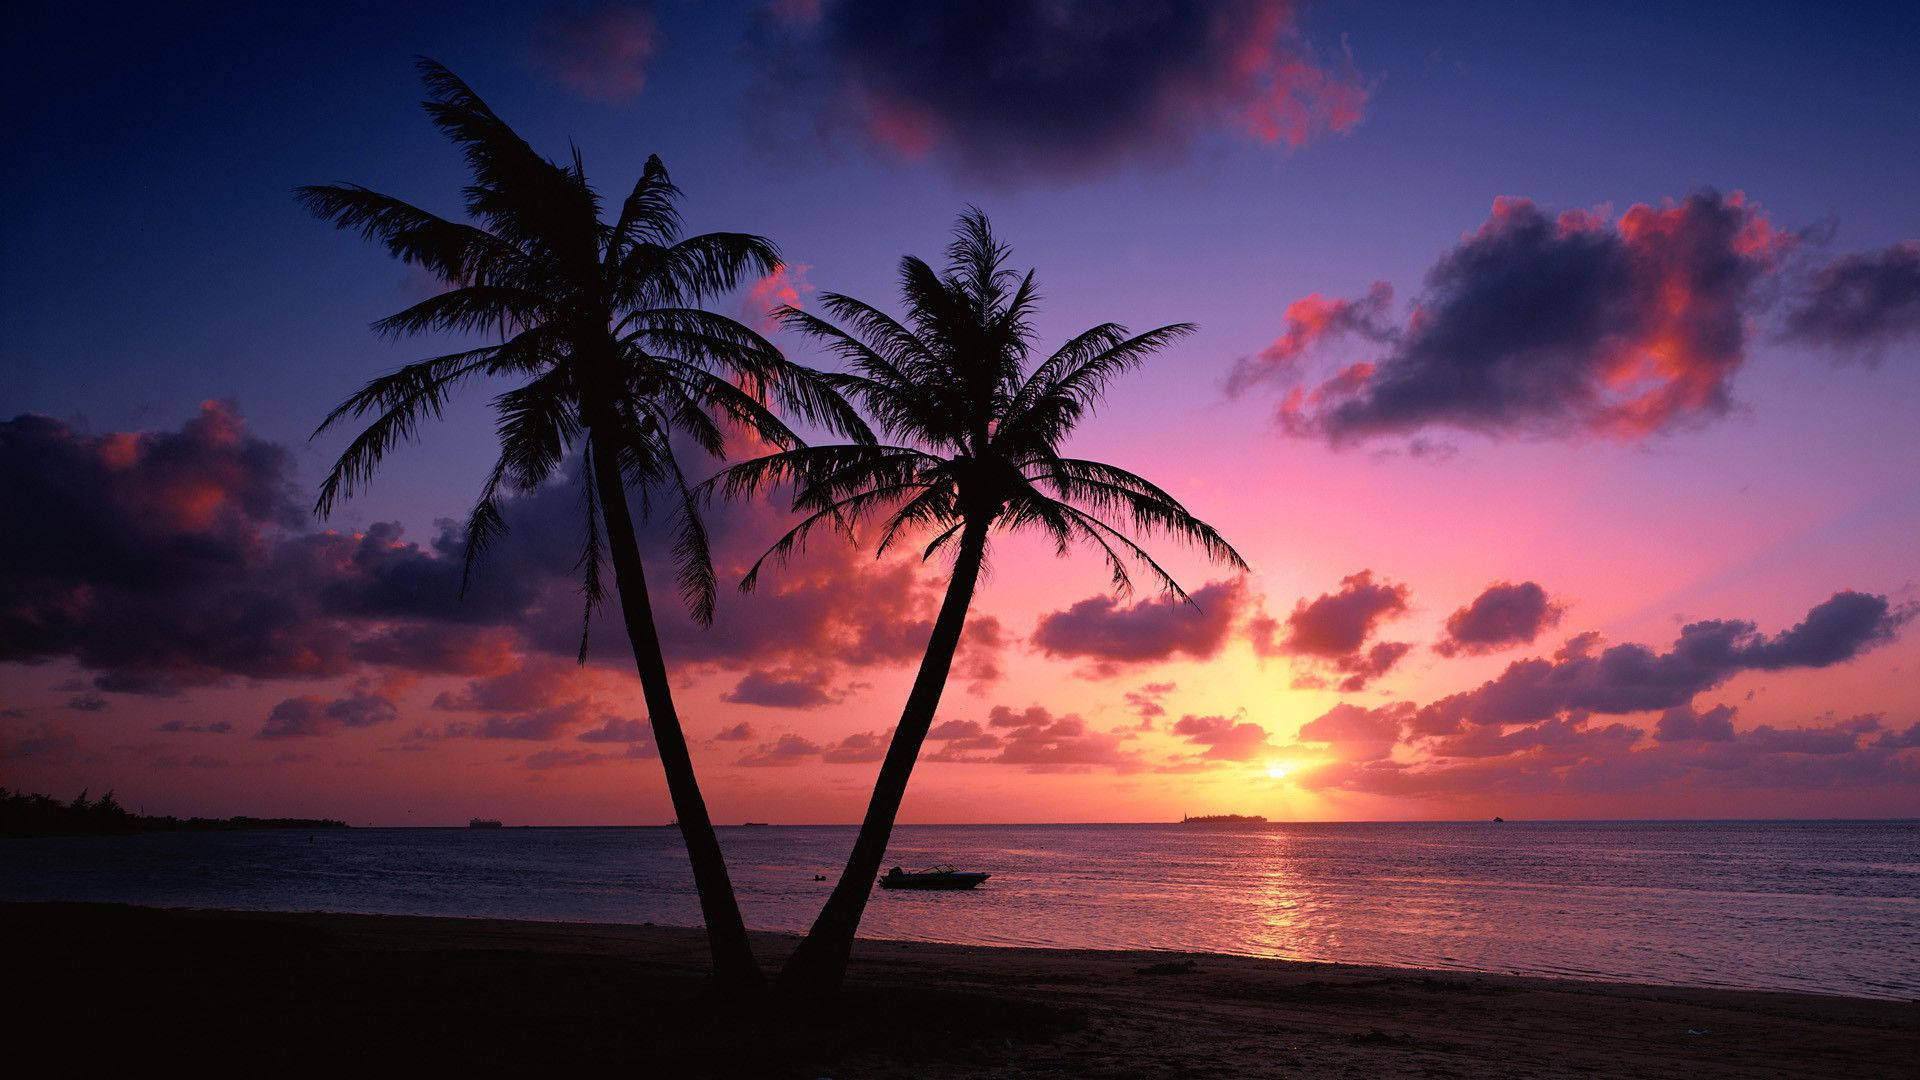 Download Scenic Tropical Beach Sunset Desktop Wallpaper 